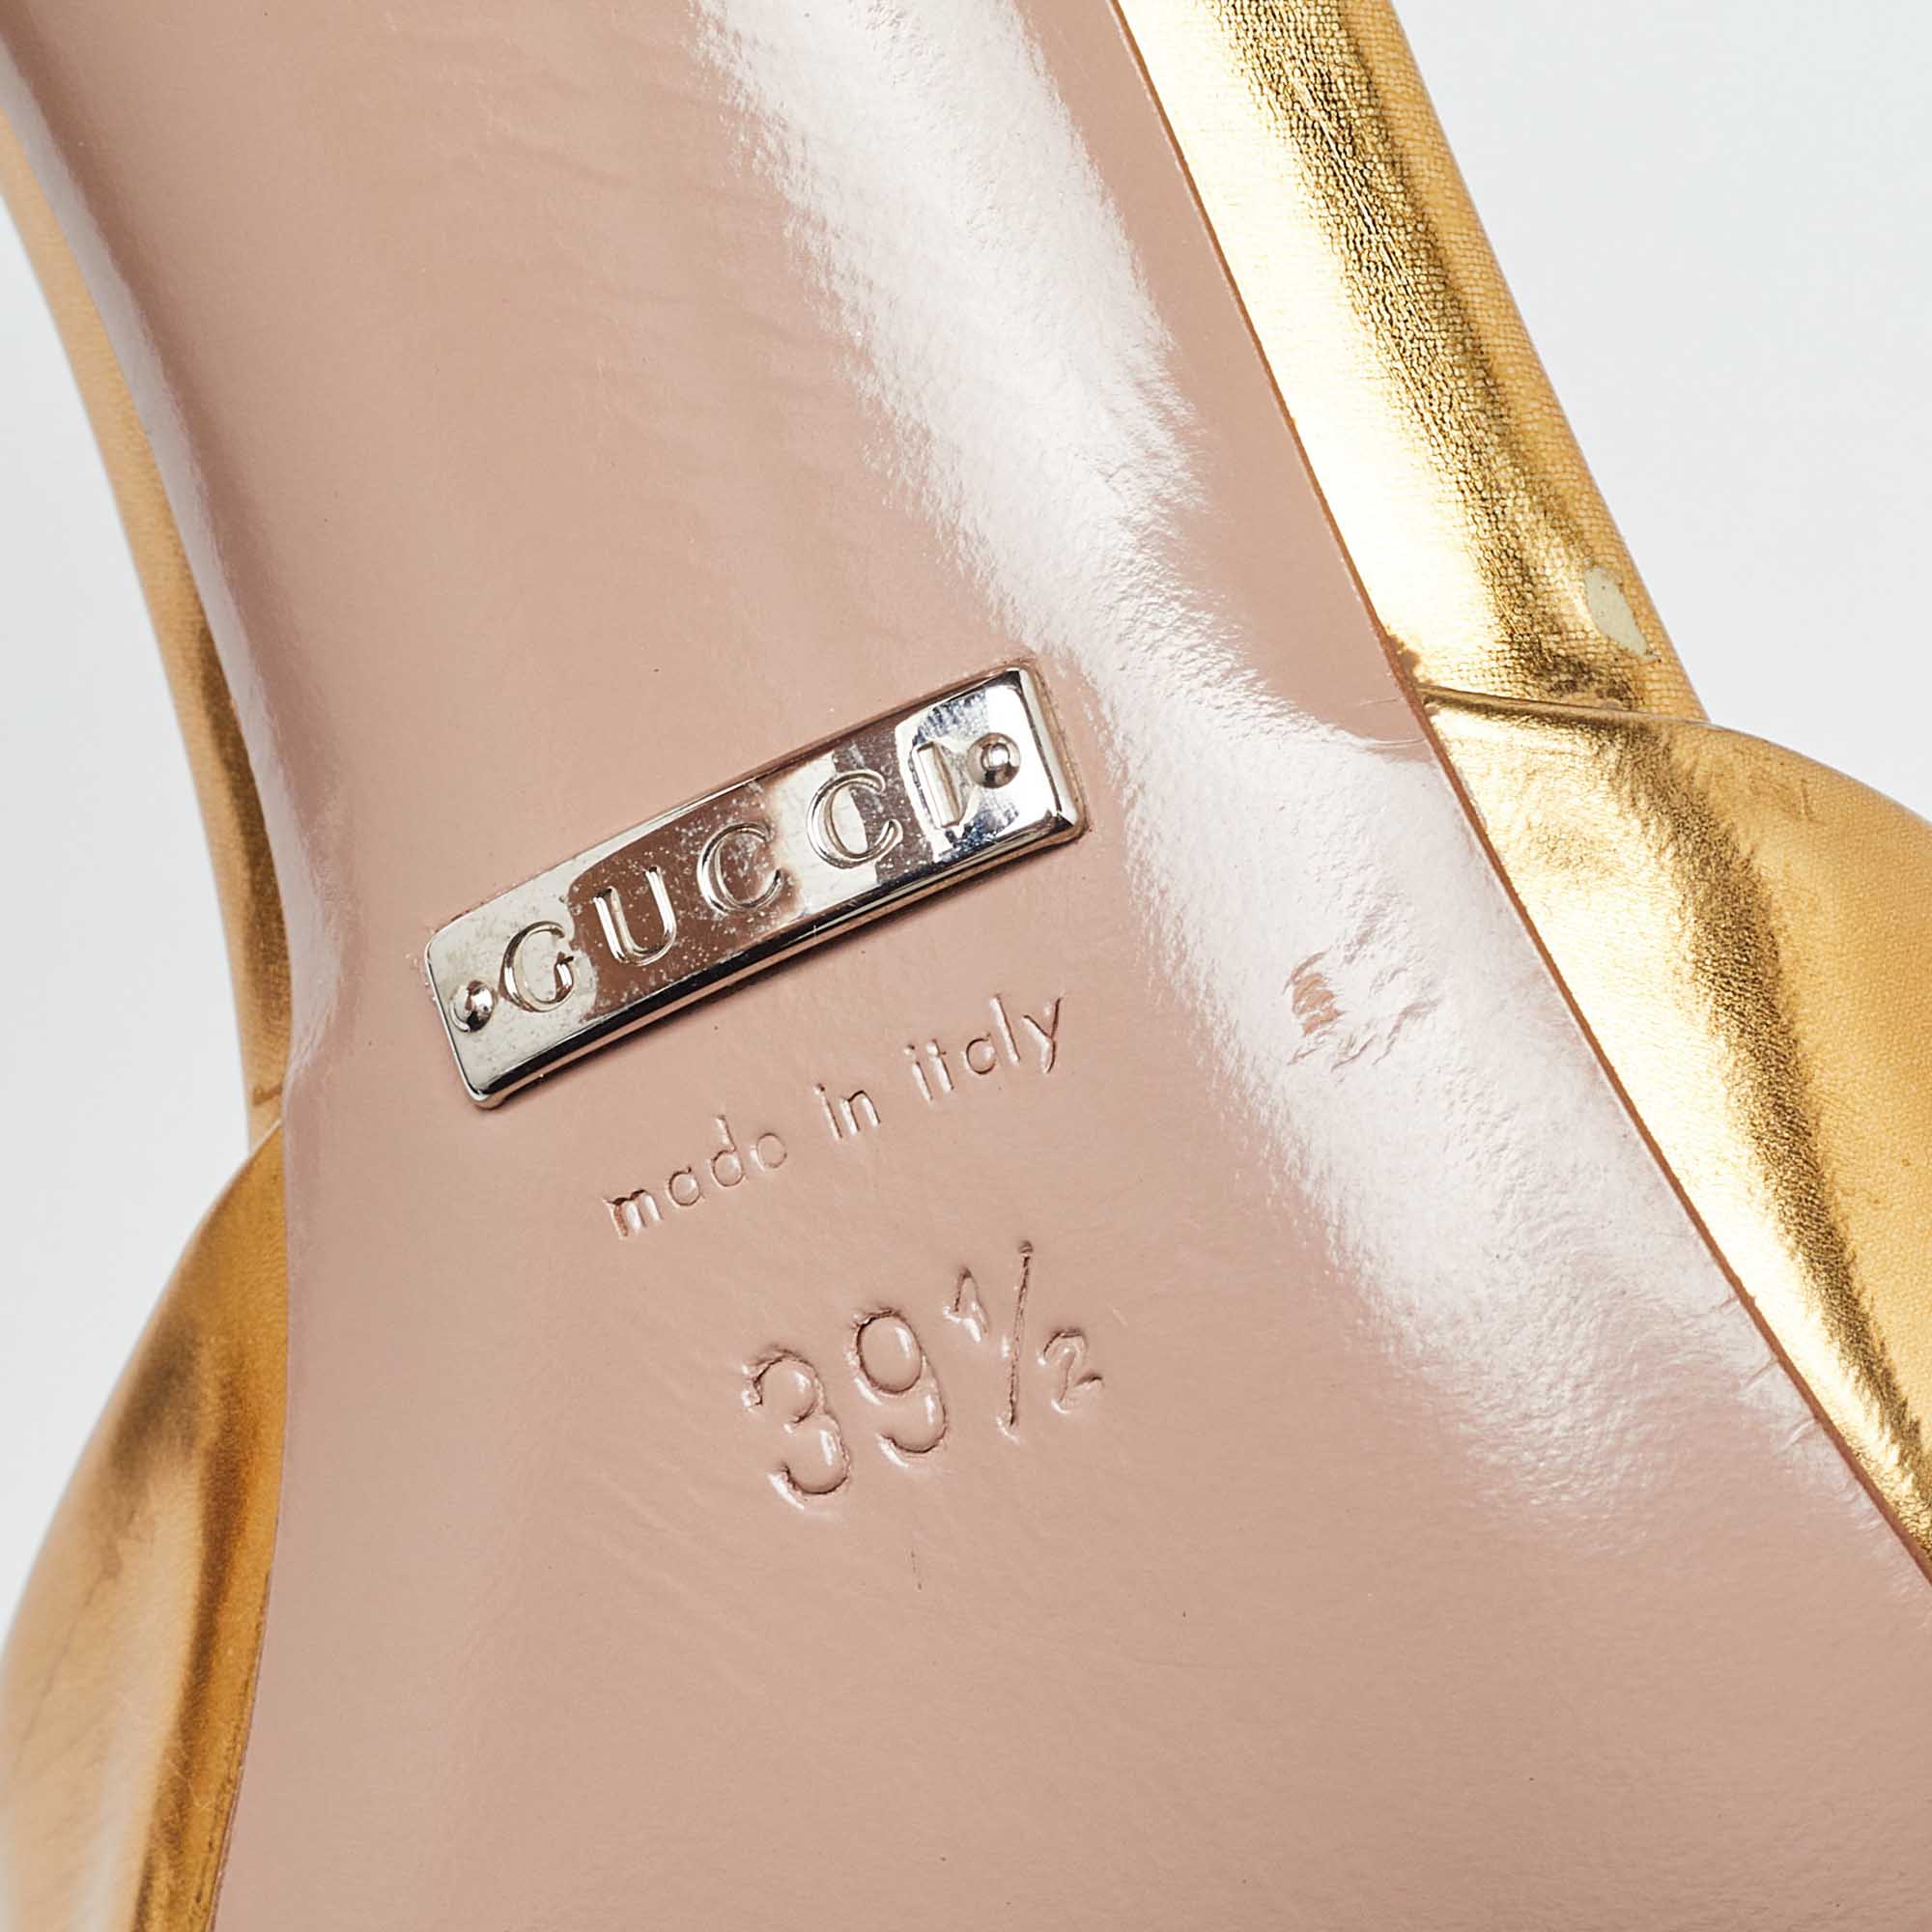 Gucci Gold Patent Leather Coline T Strap Pumps Size 39.5